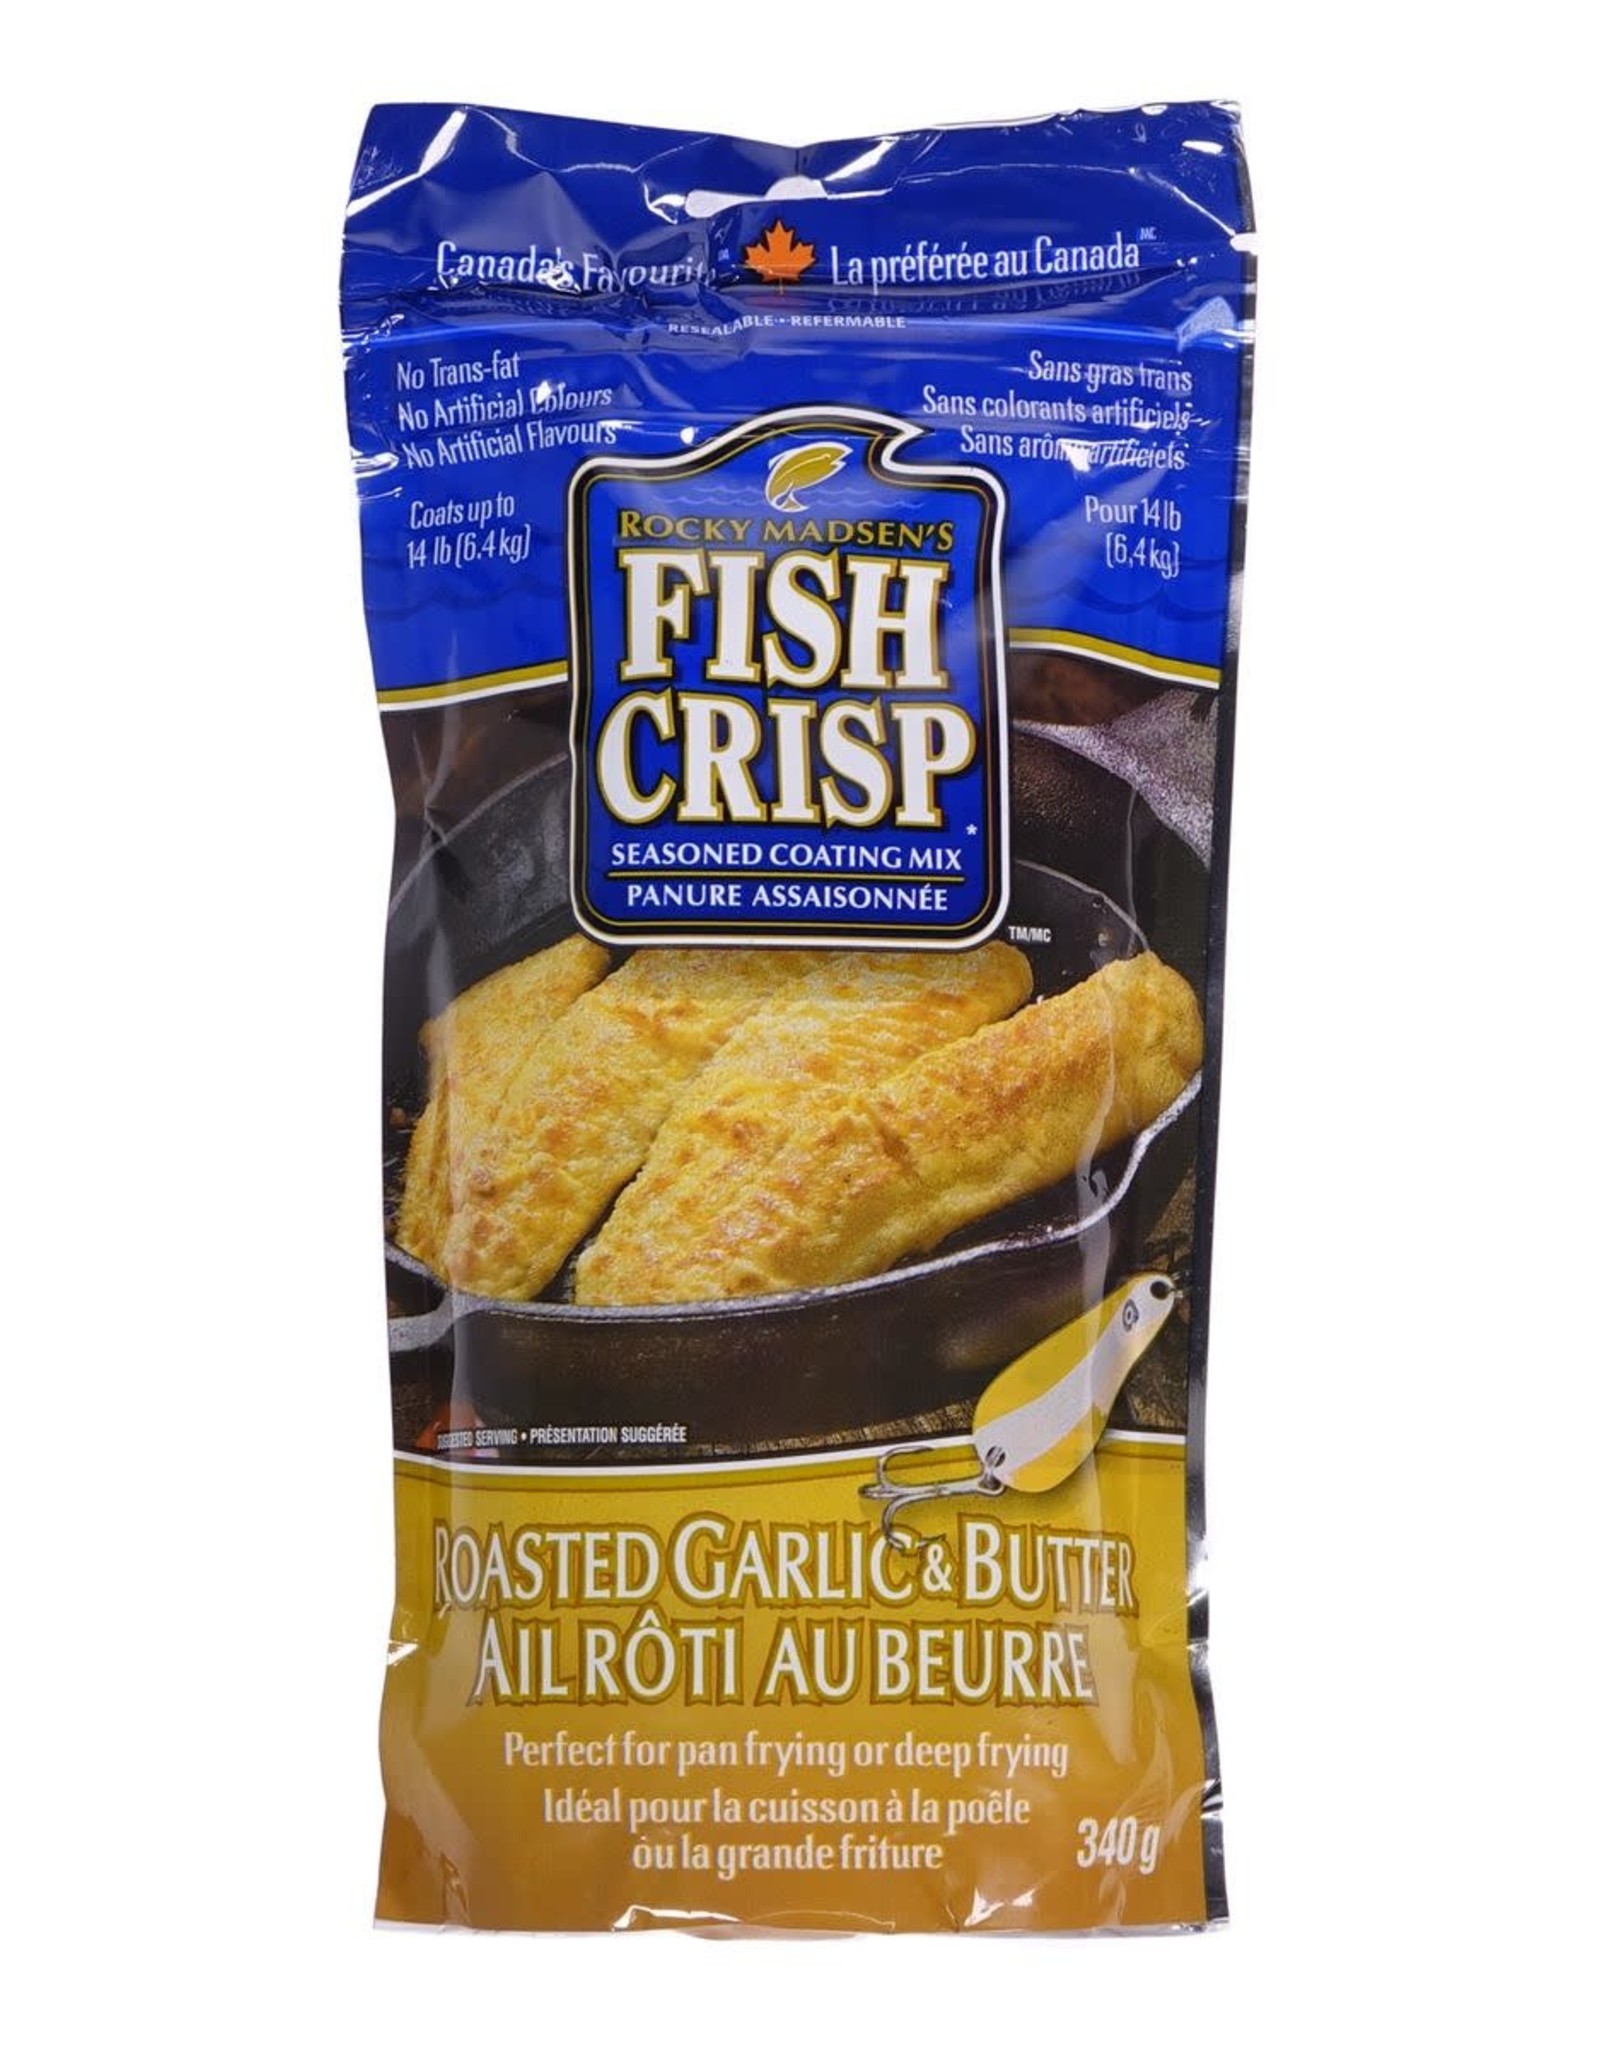 McCormick Canada Fish Crisp Roasted Garlic & Butter